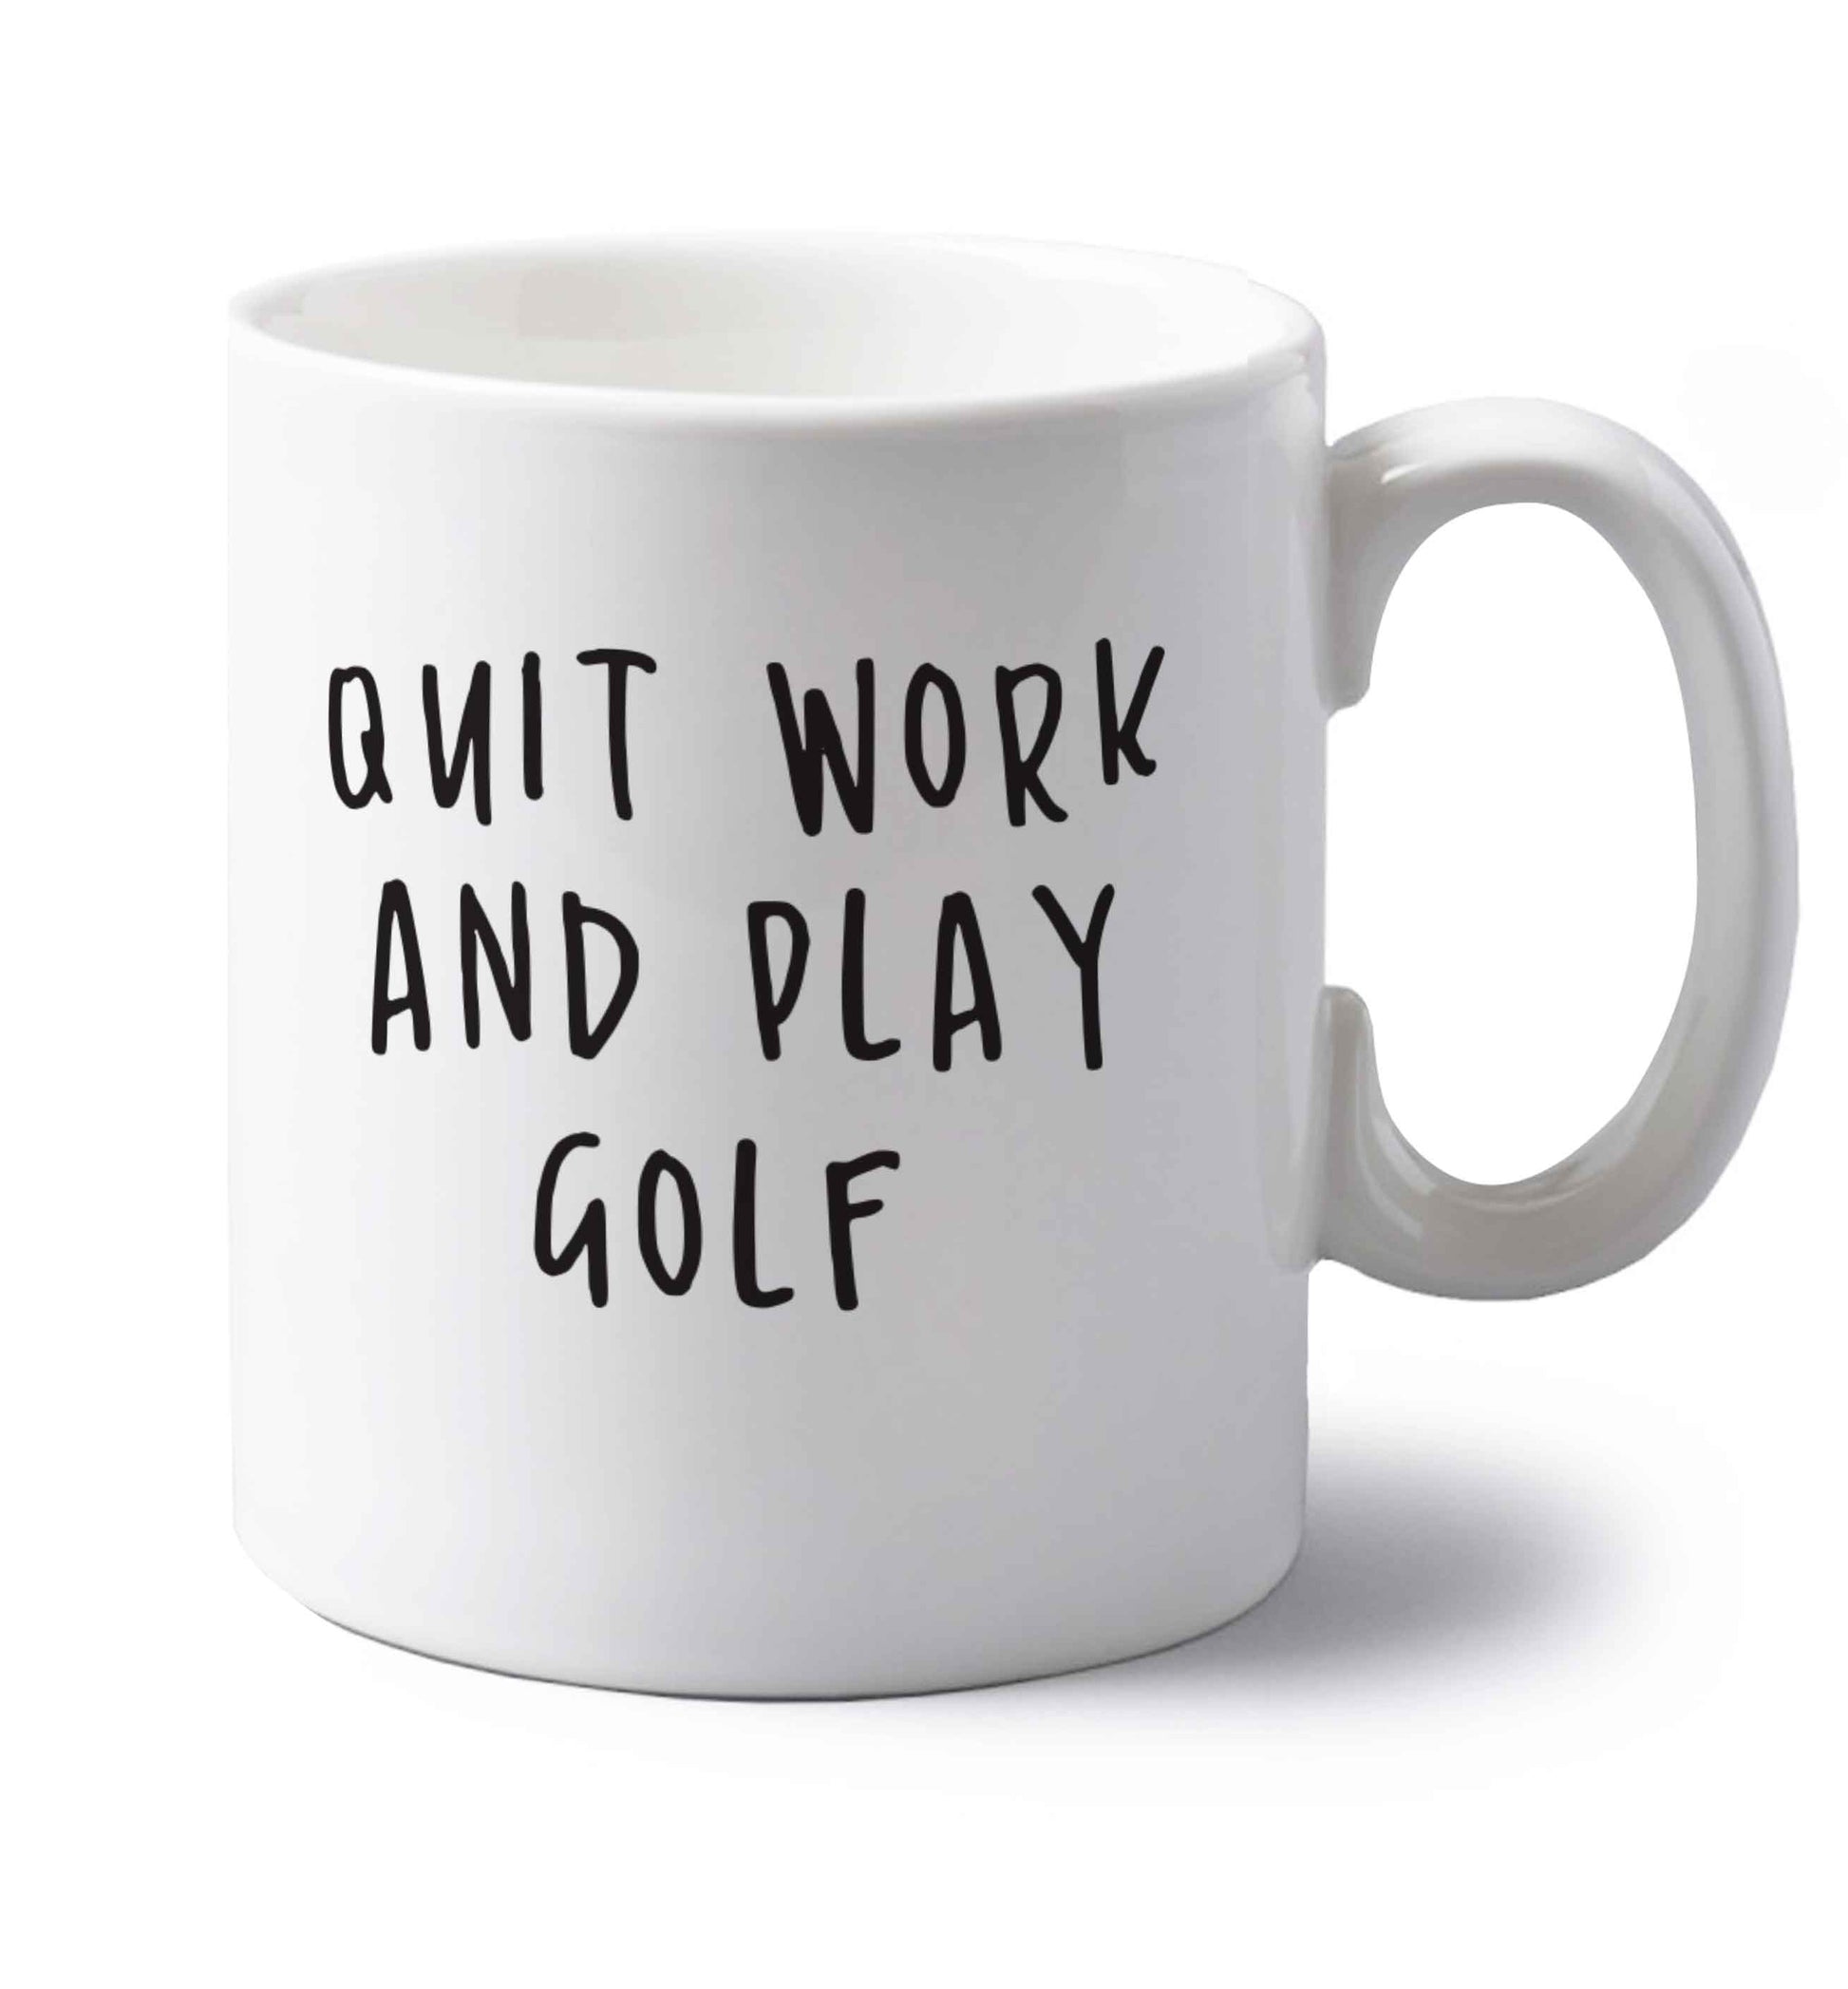 Quit work and play golf left handed white ceramic mug 